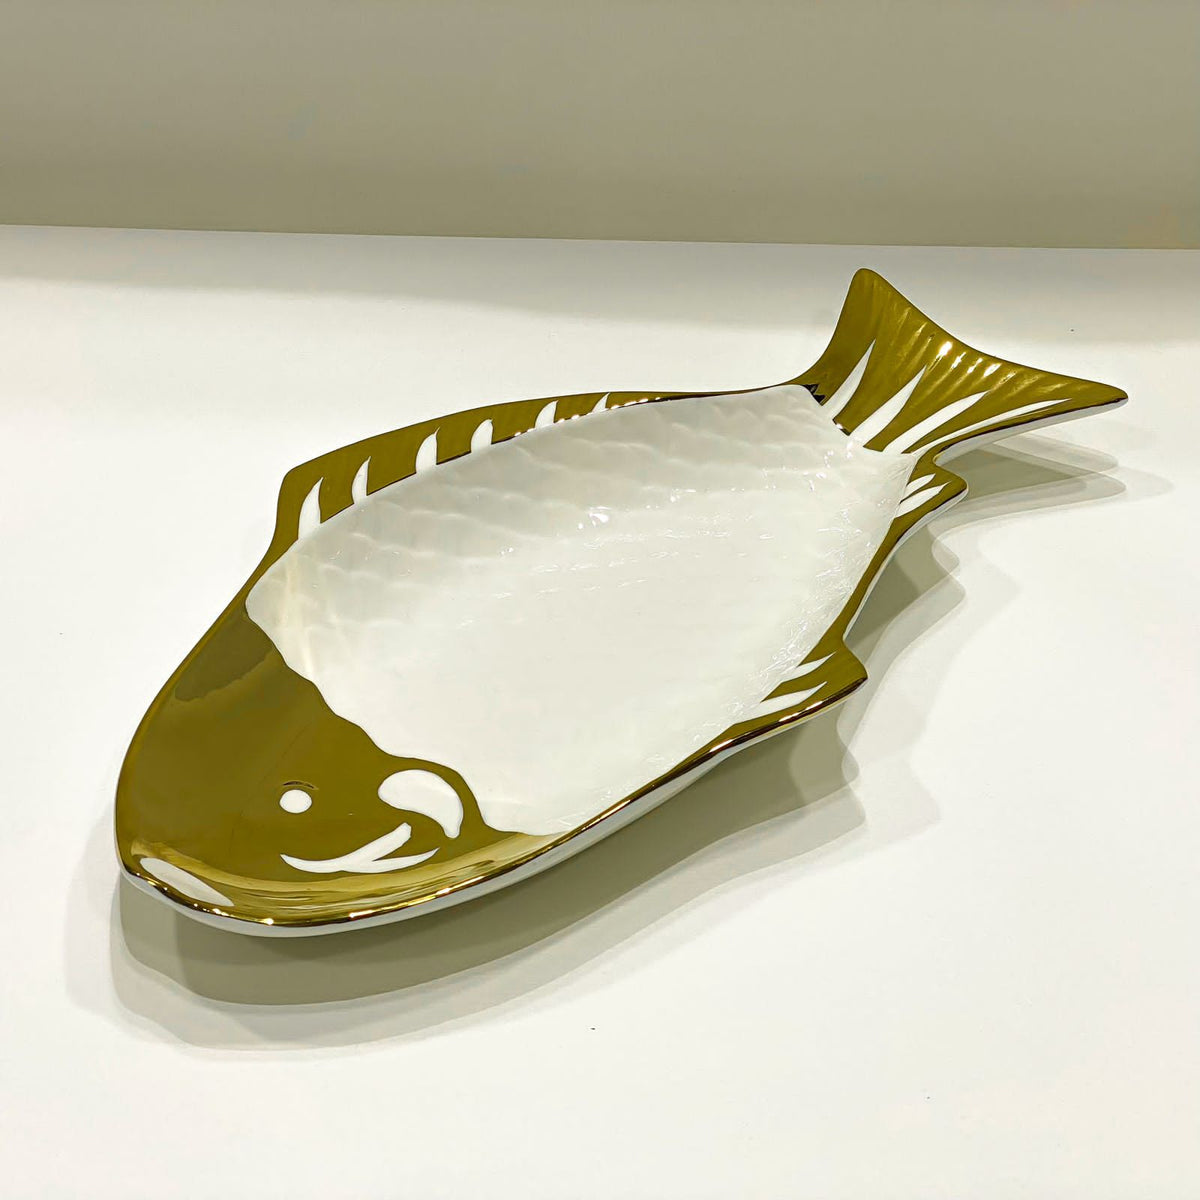 Ceramic Fish Shaped Serving Platter